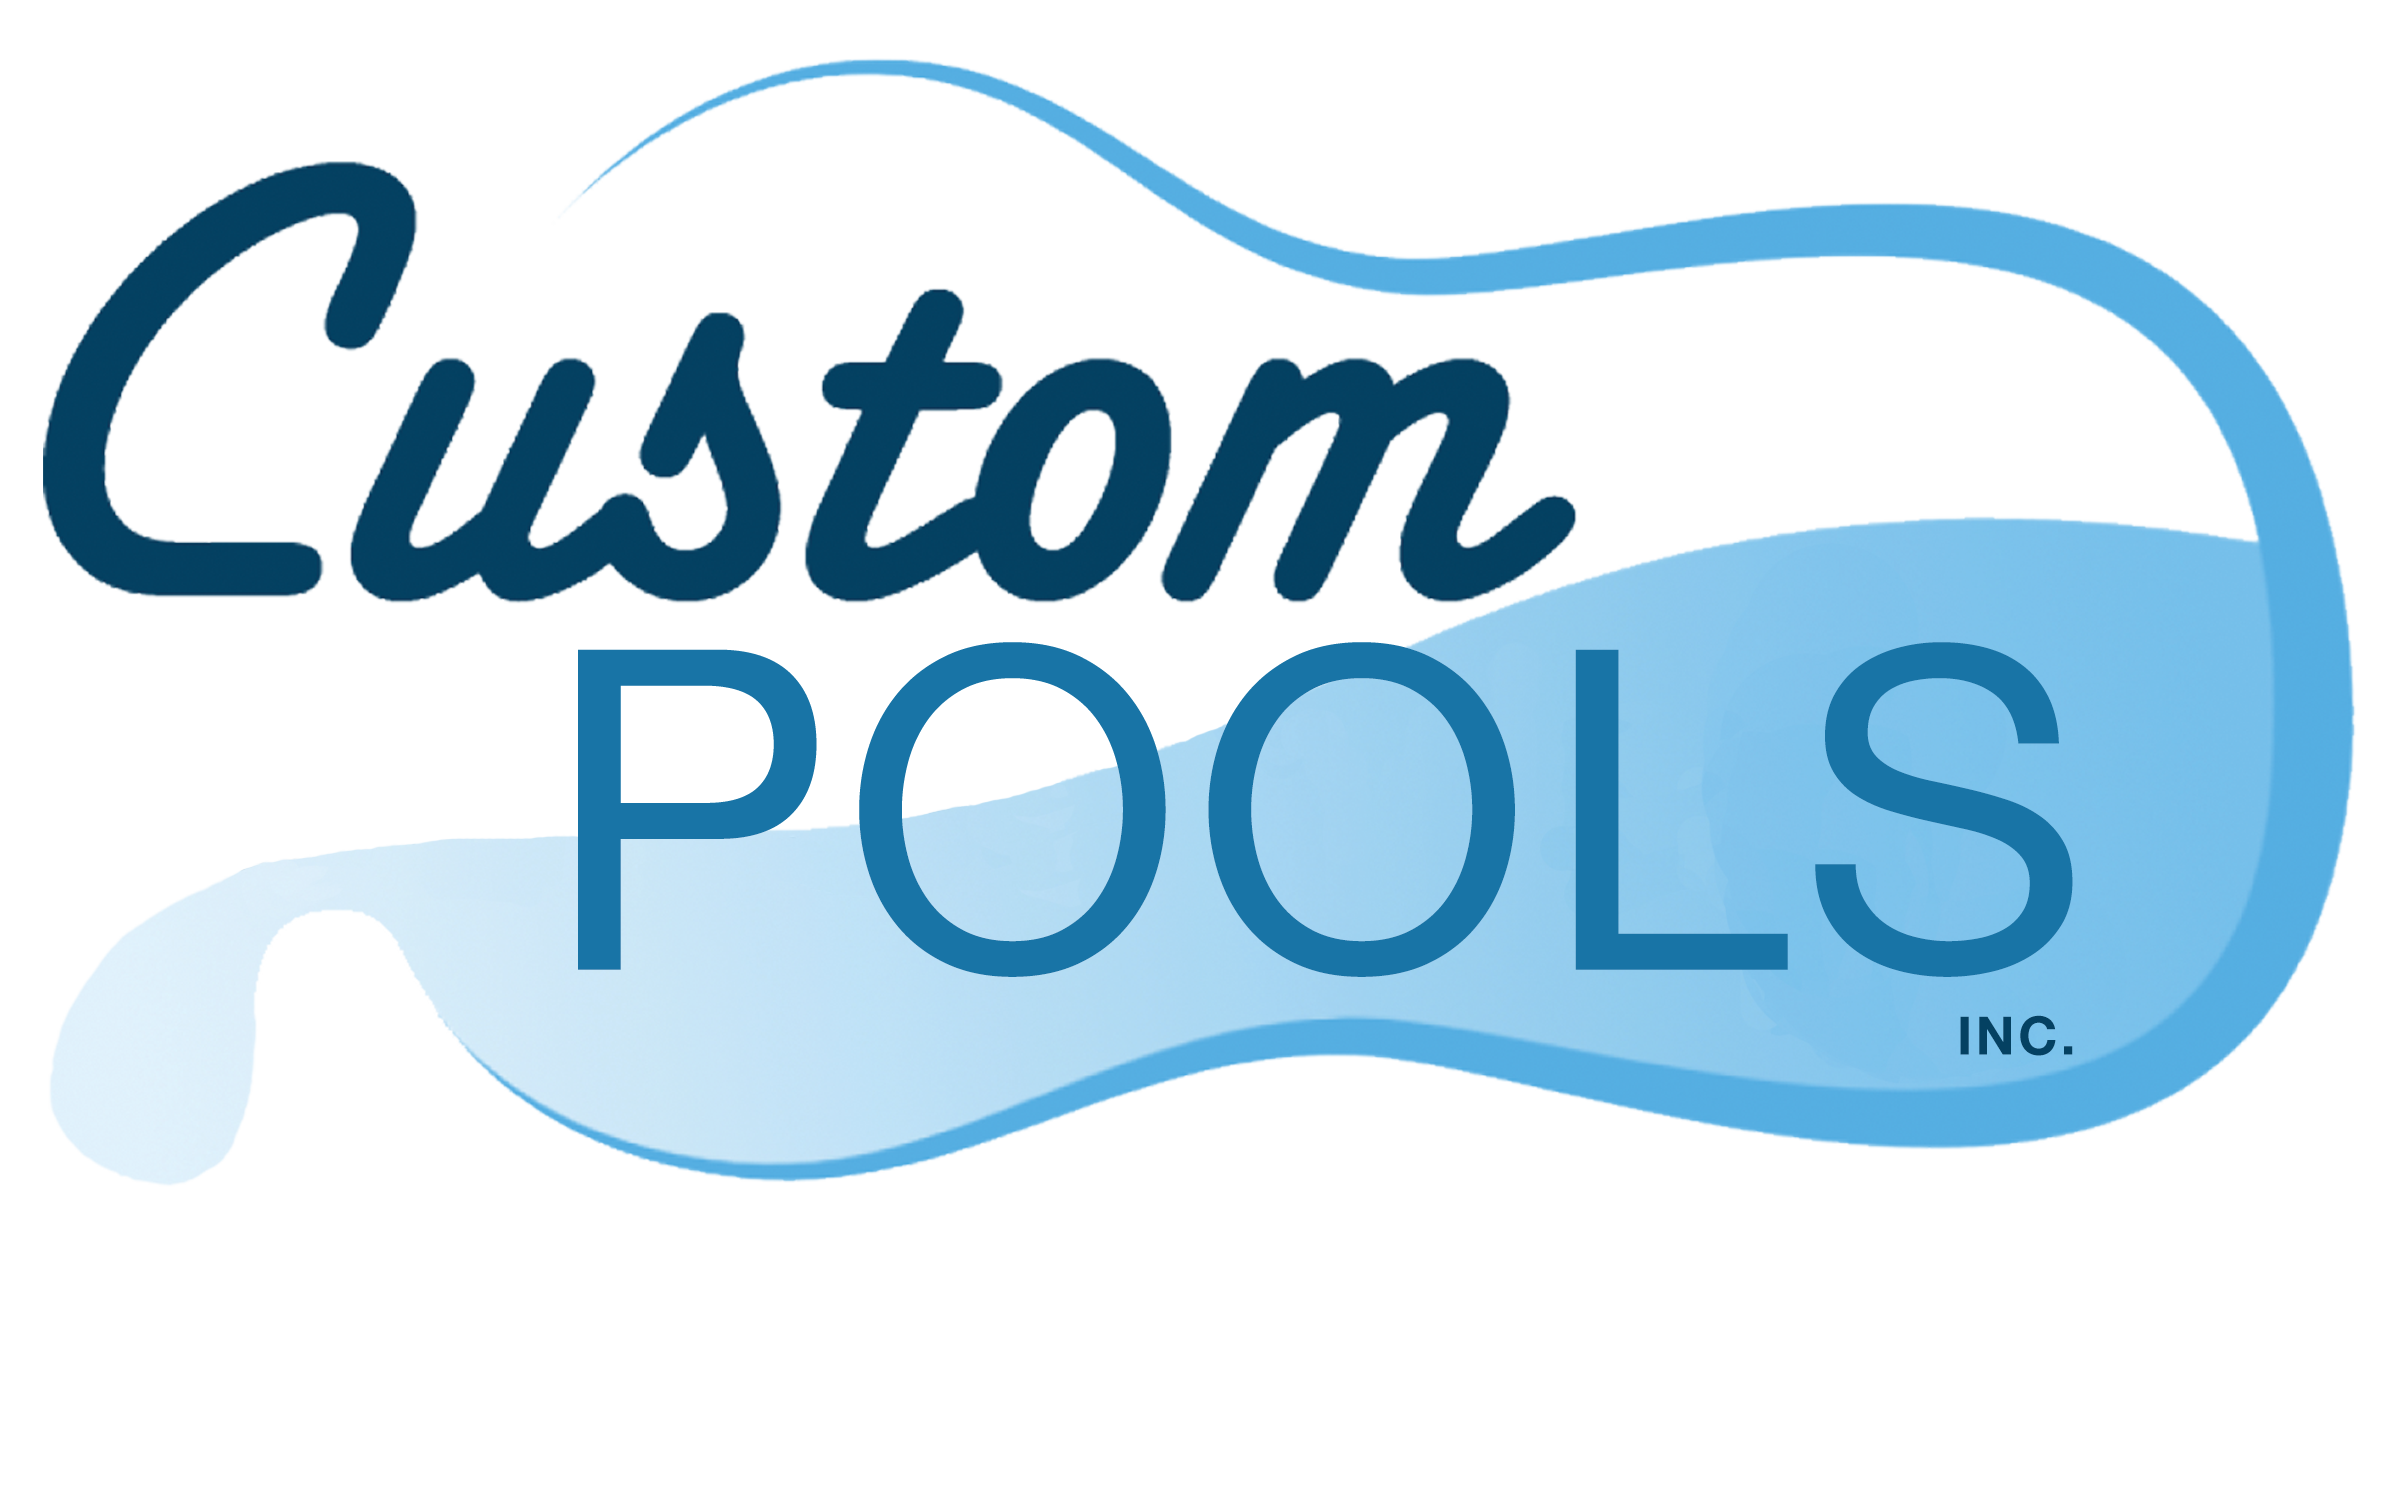 clipart swimming community pool